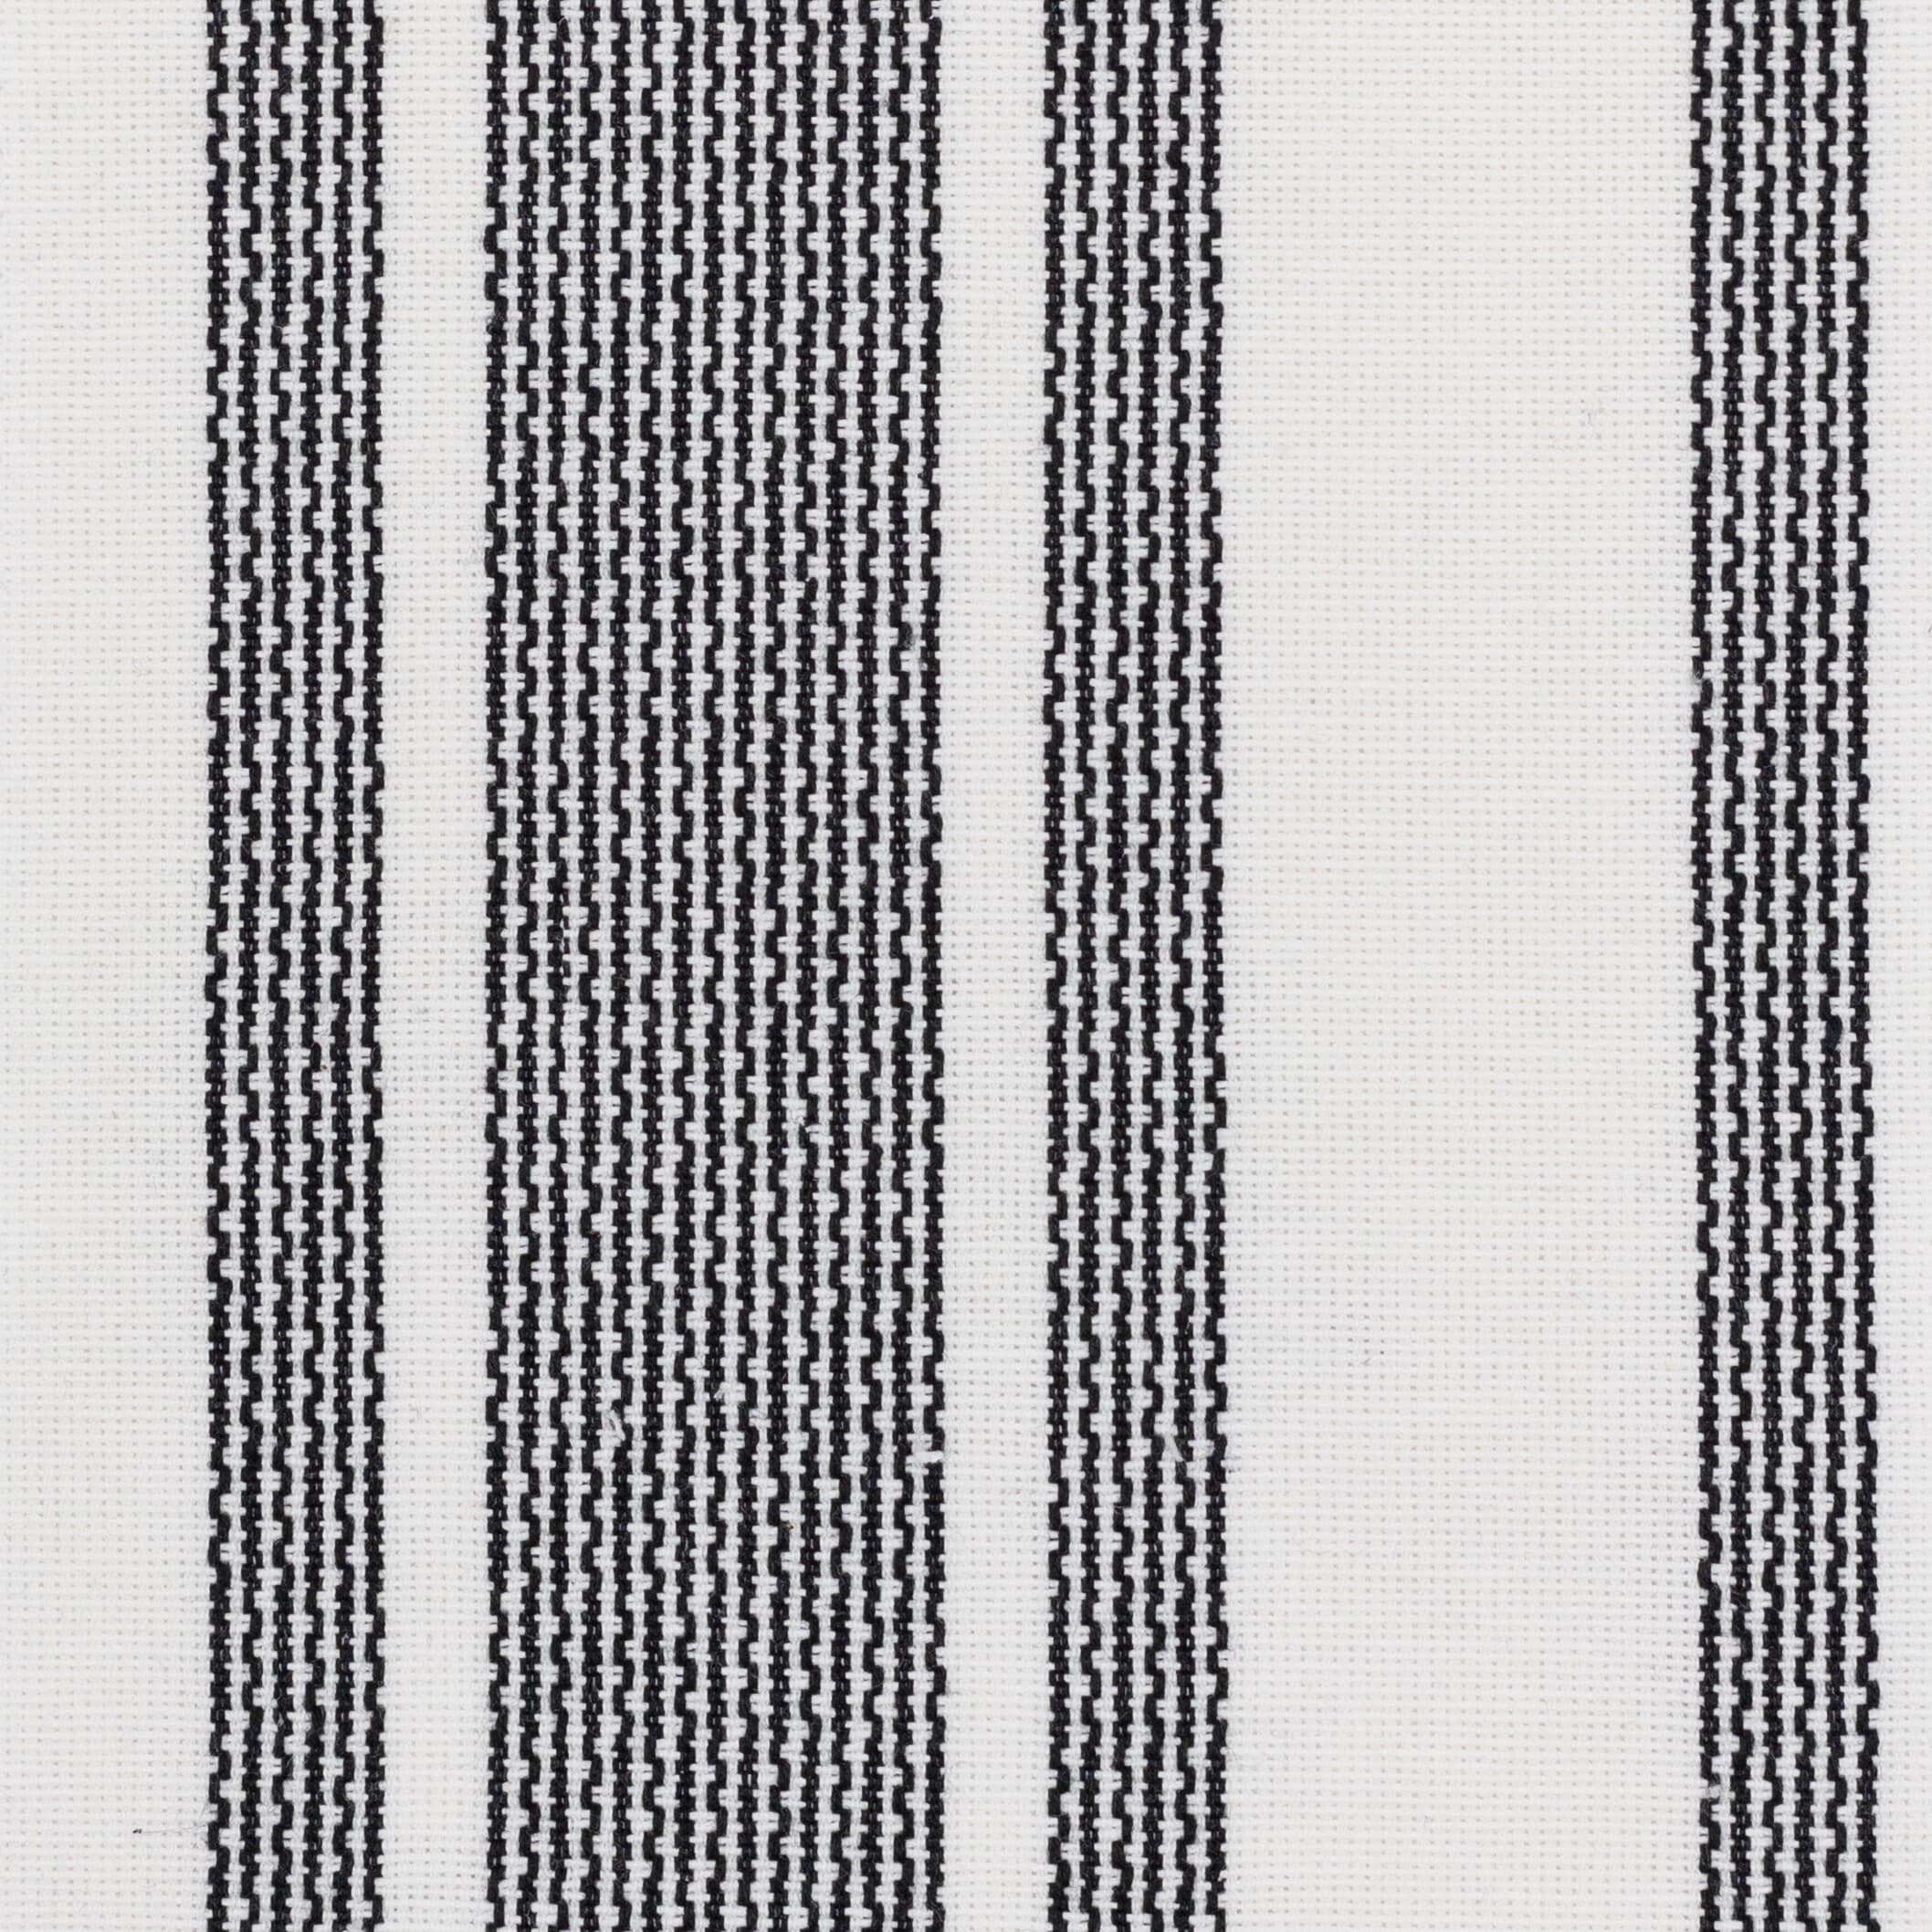 Braiding 1 Black/white by Stout Fabric